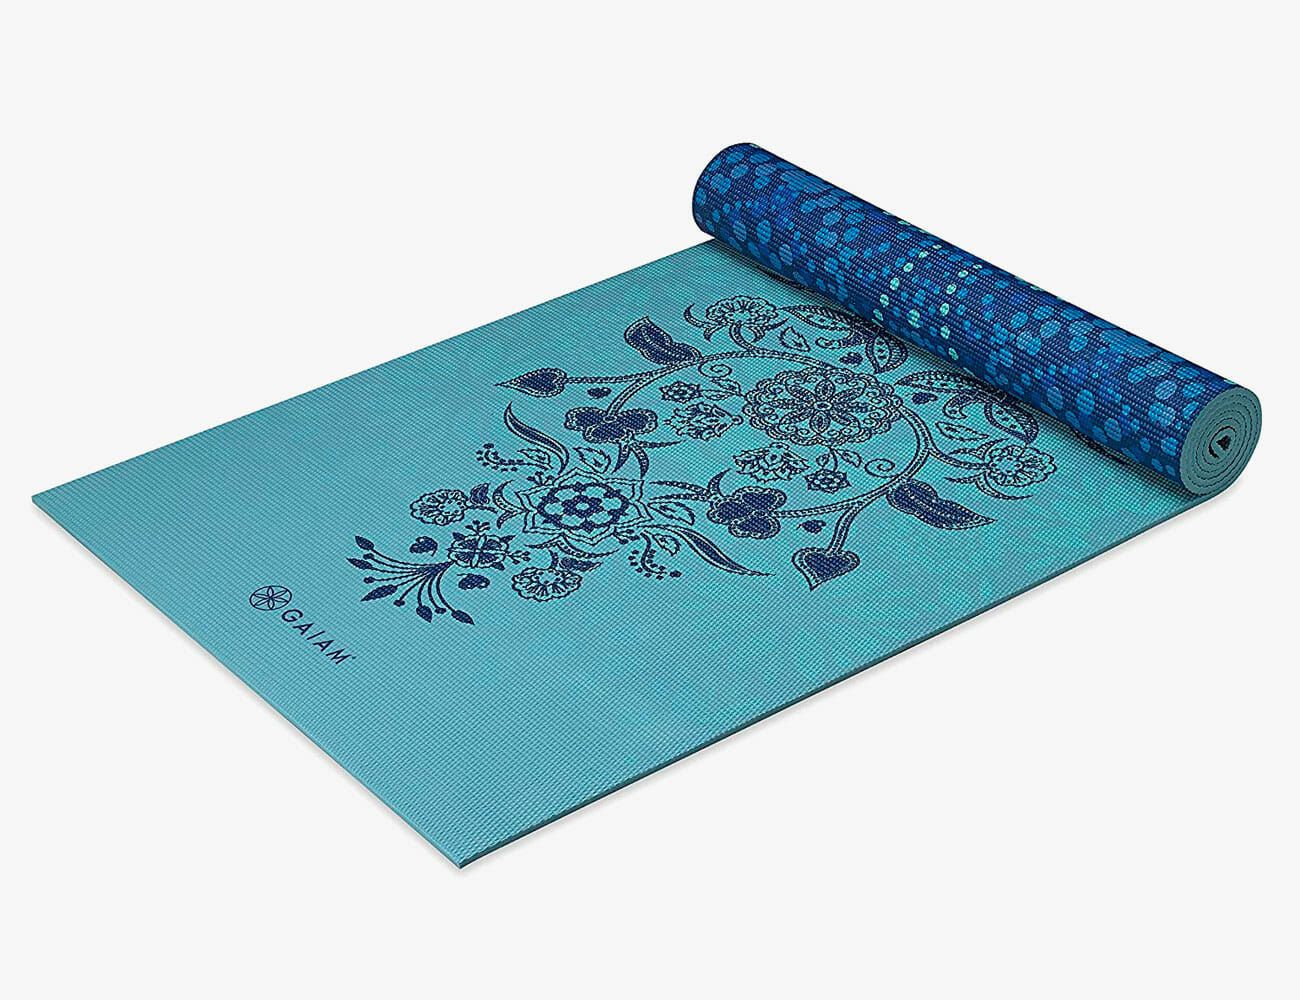 most beautiful yoga mats